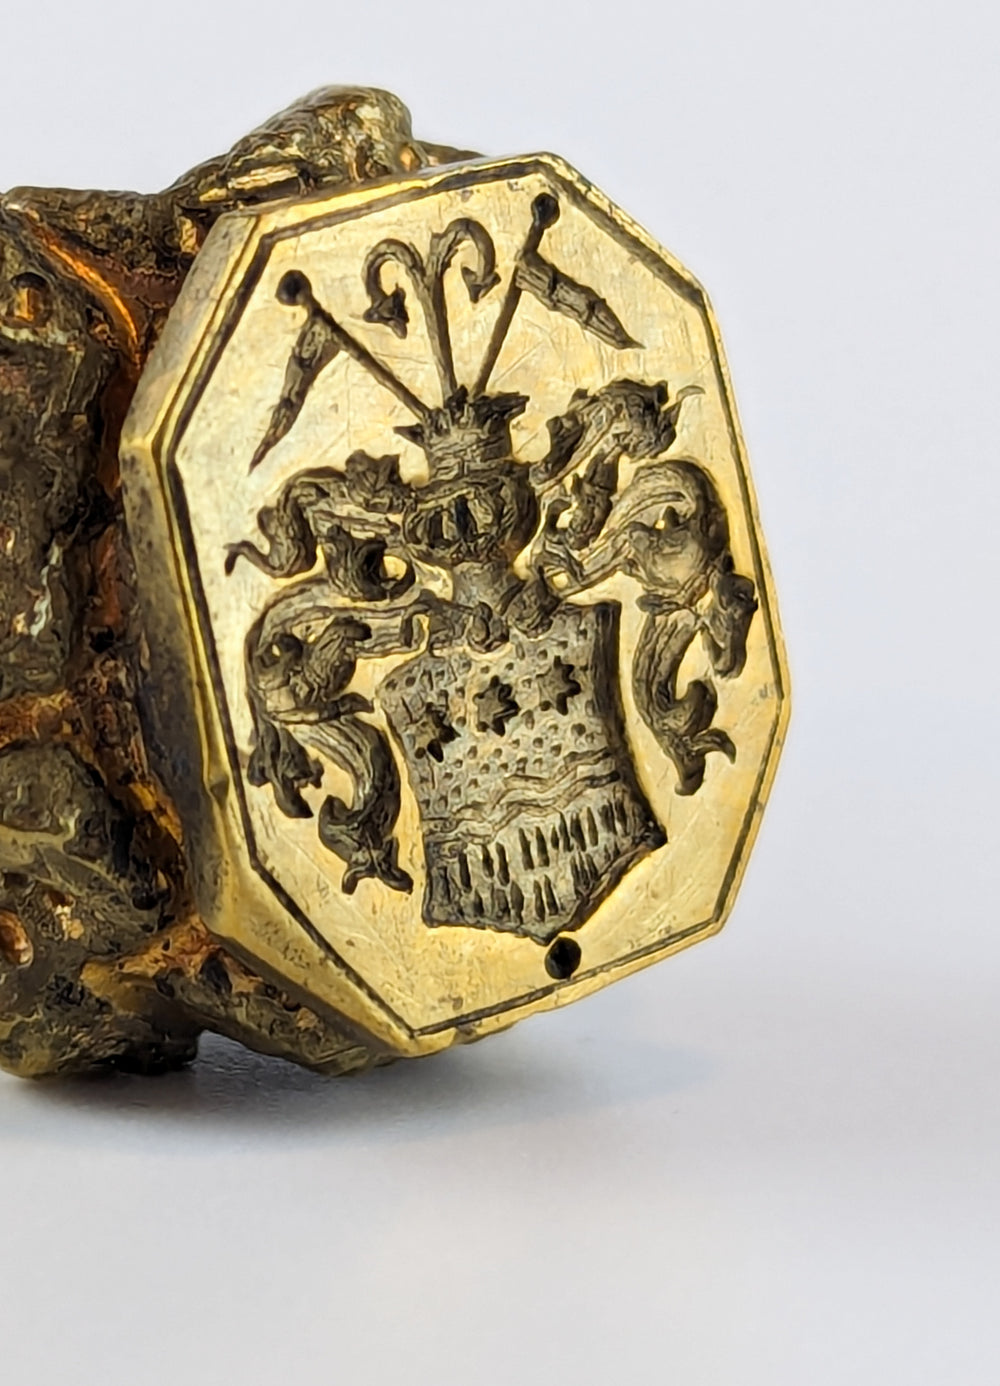 Unusual Lady's Leg Gilt Brass Continental Armorial Desk Seal